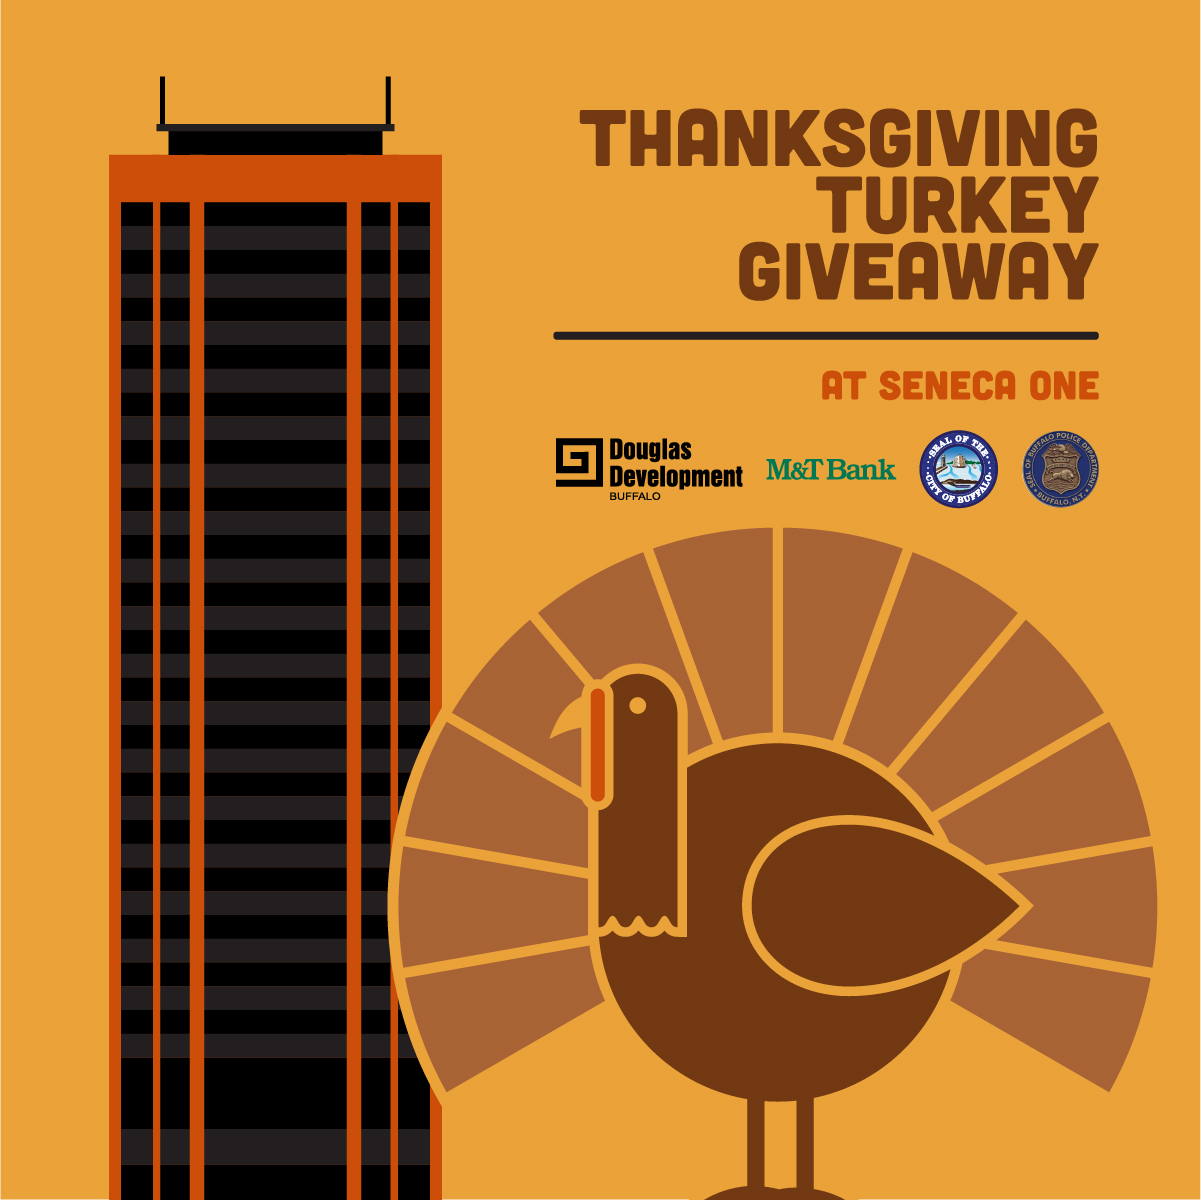 Douglas Development, M&T Bank Host Drive-Thru Thanksgiving Turkey Giveaway Helping 500 Families in the Buffalo Community 